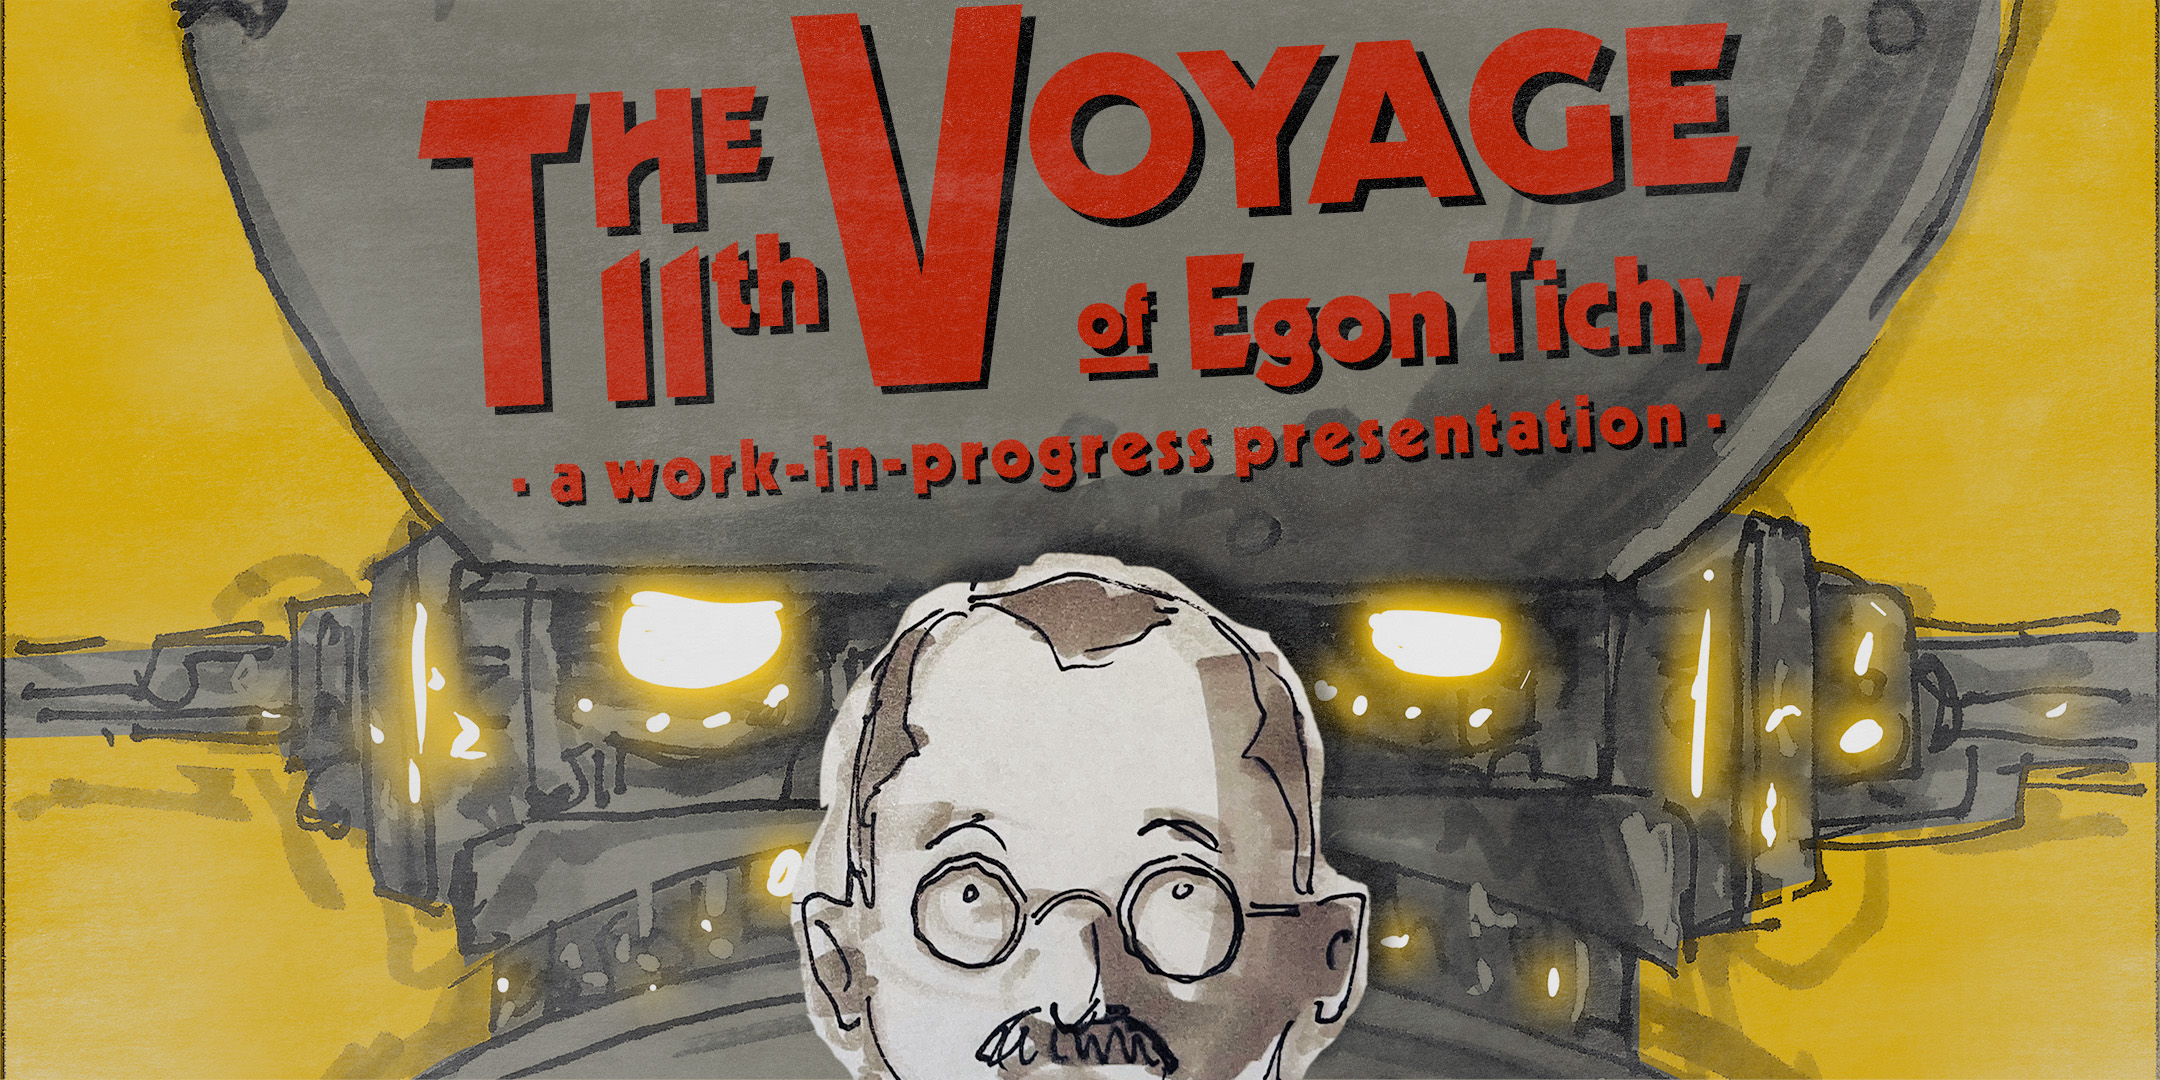 The 11th Voyage of Egon Tichy